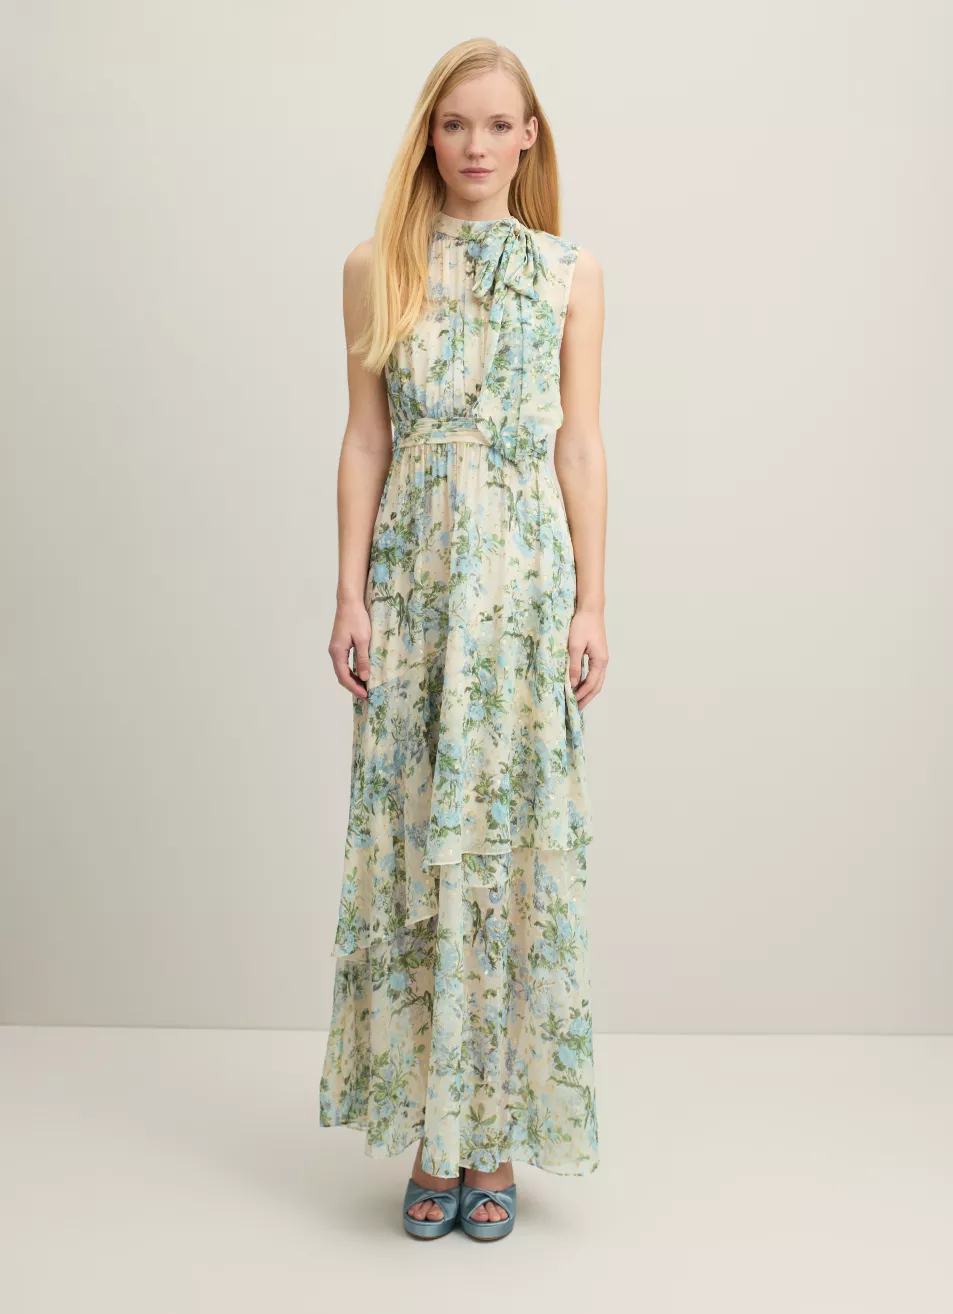 L K Bennett Robyn Neon Garden Print Silk-Blend Dress, Cream